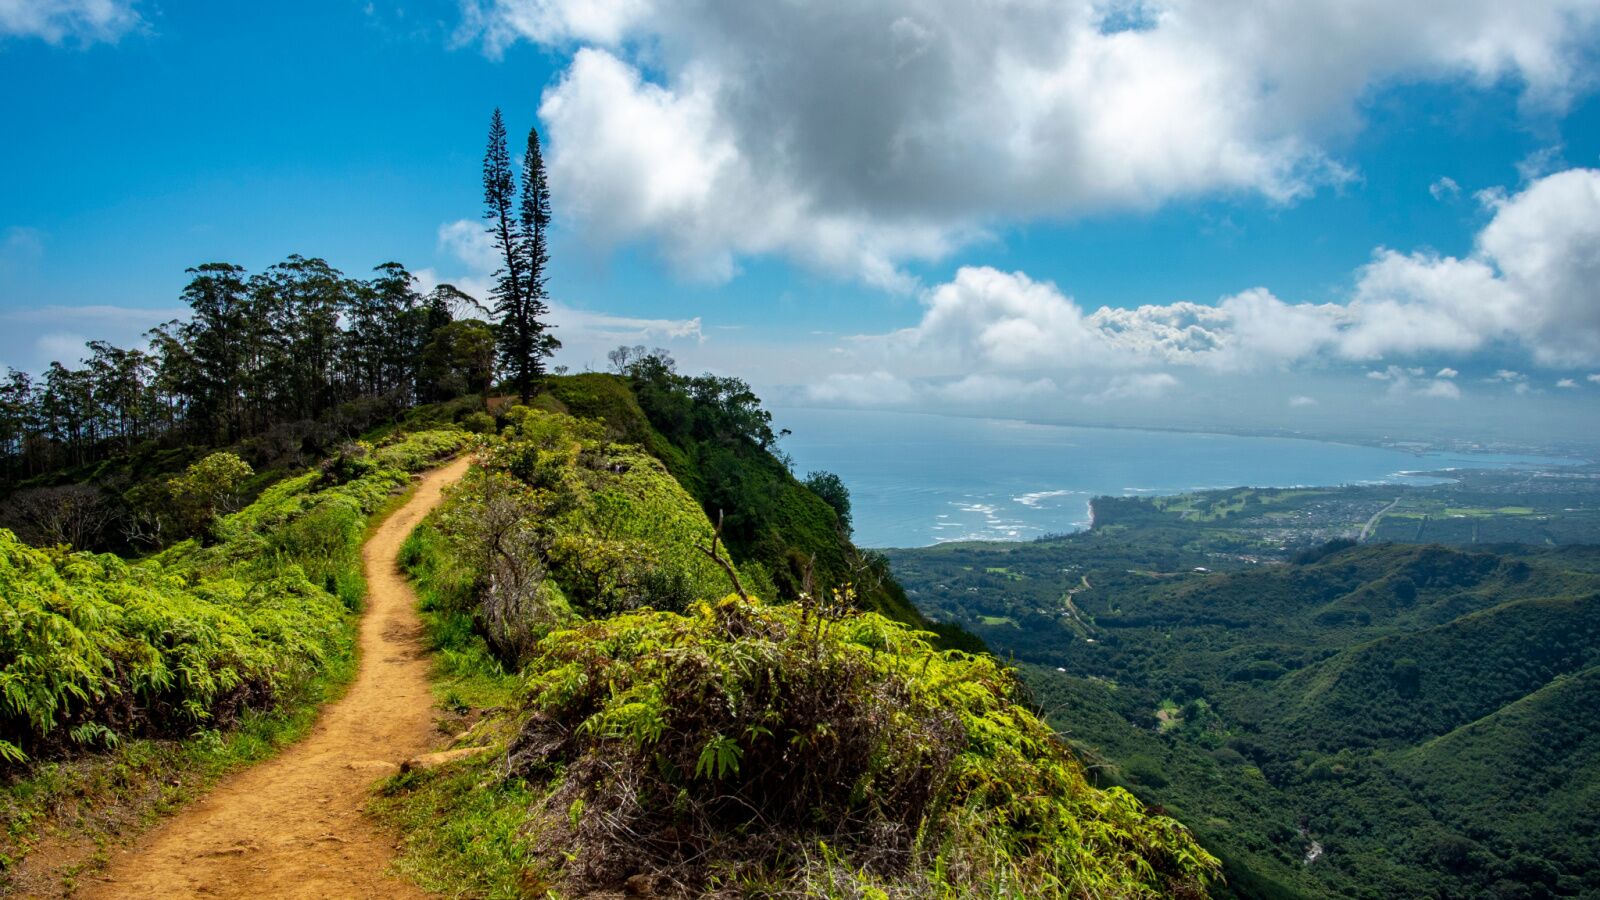 Waihee ridge, a beauitful hiking trail in hawaii on maui